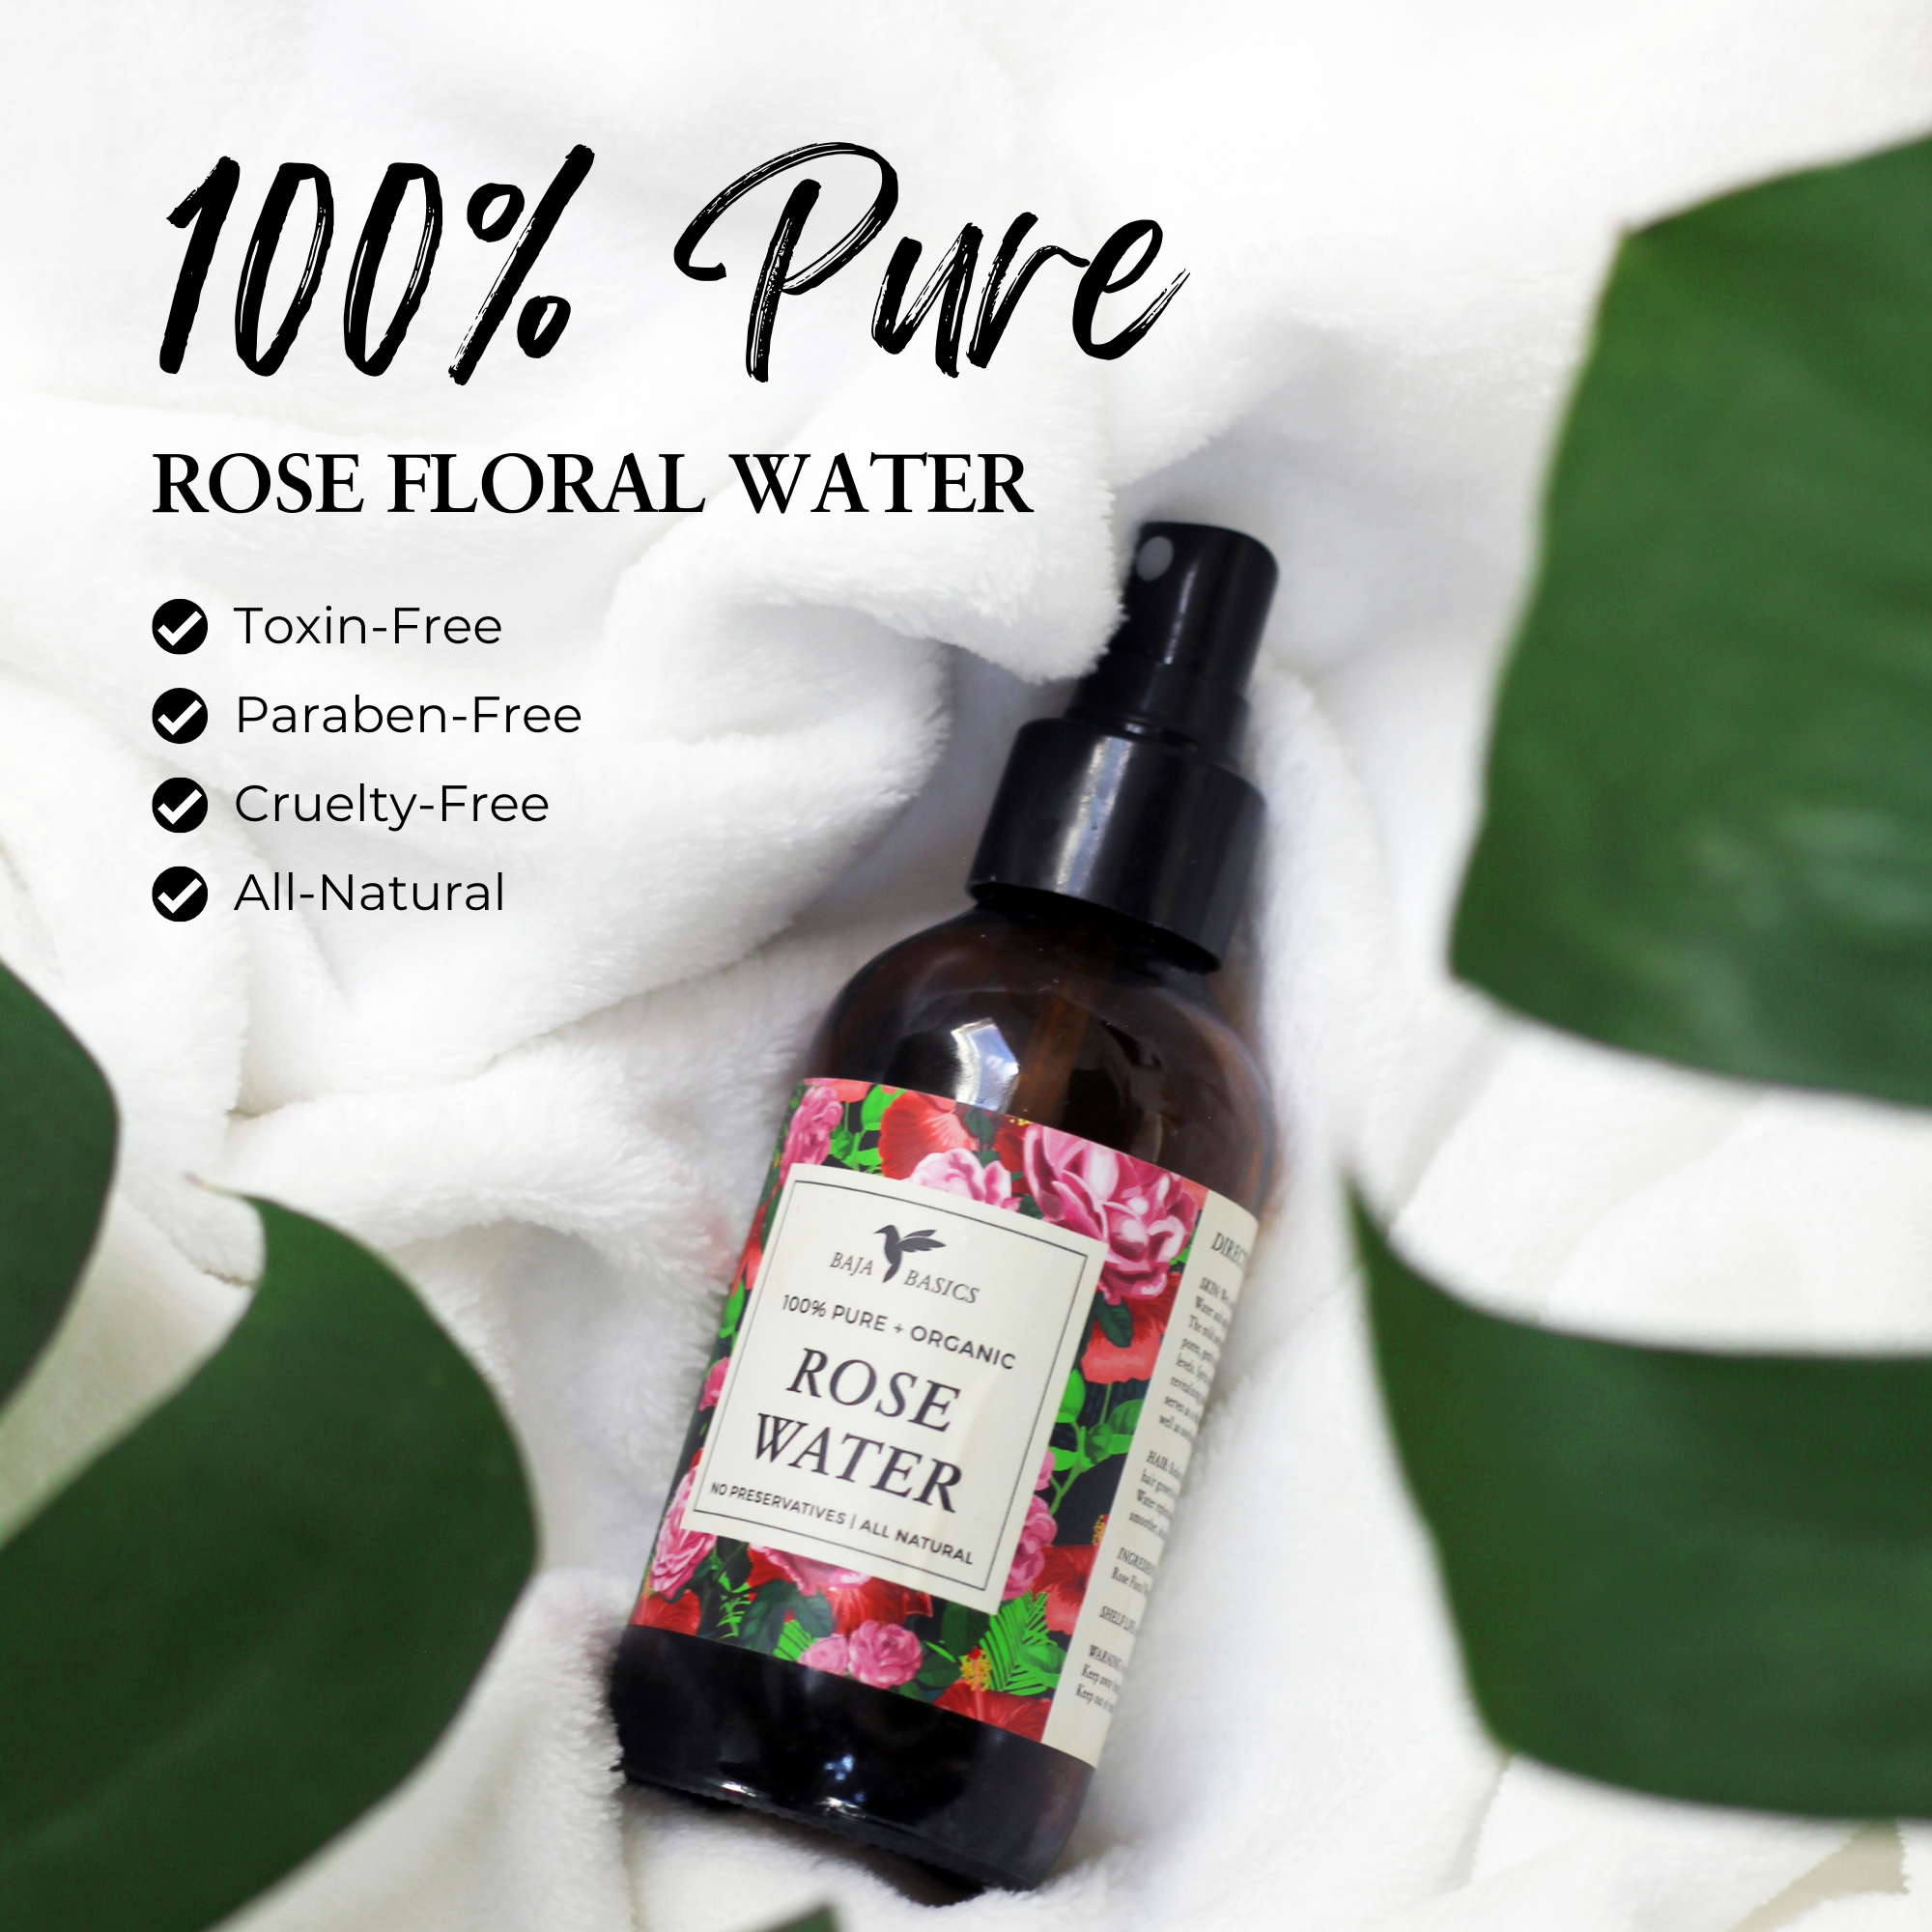  Rose Essential Oil 100% Pure Organic Rose Oil for